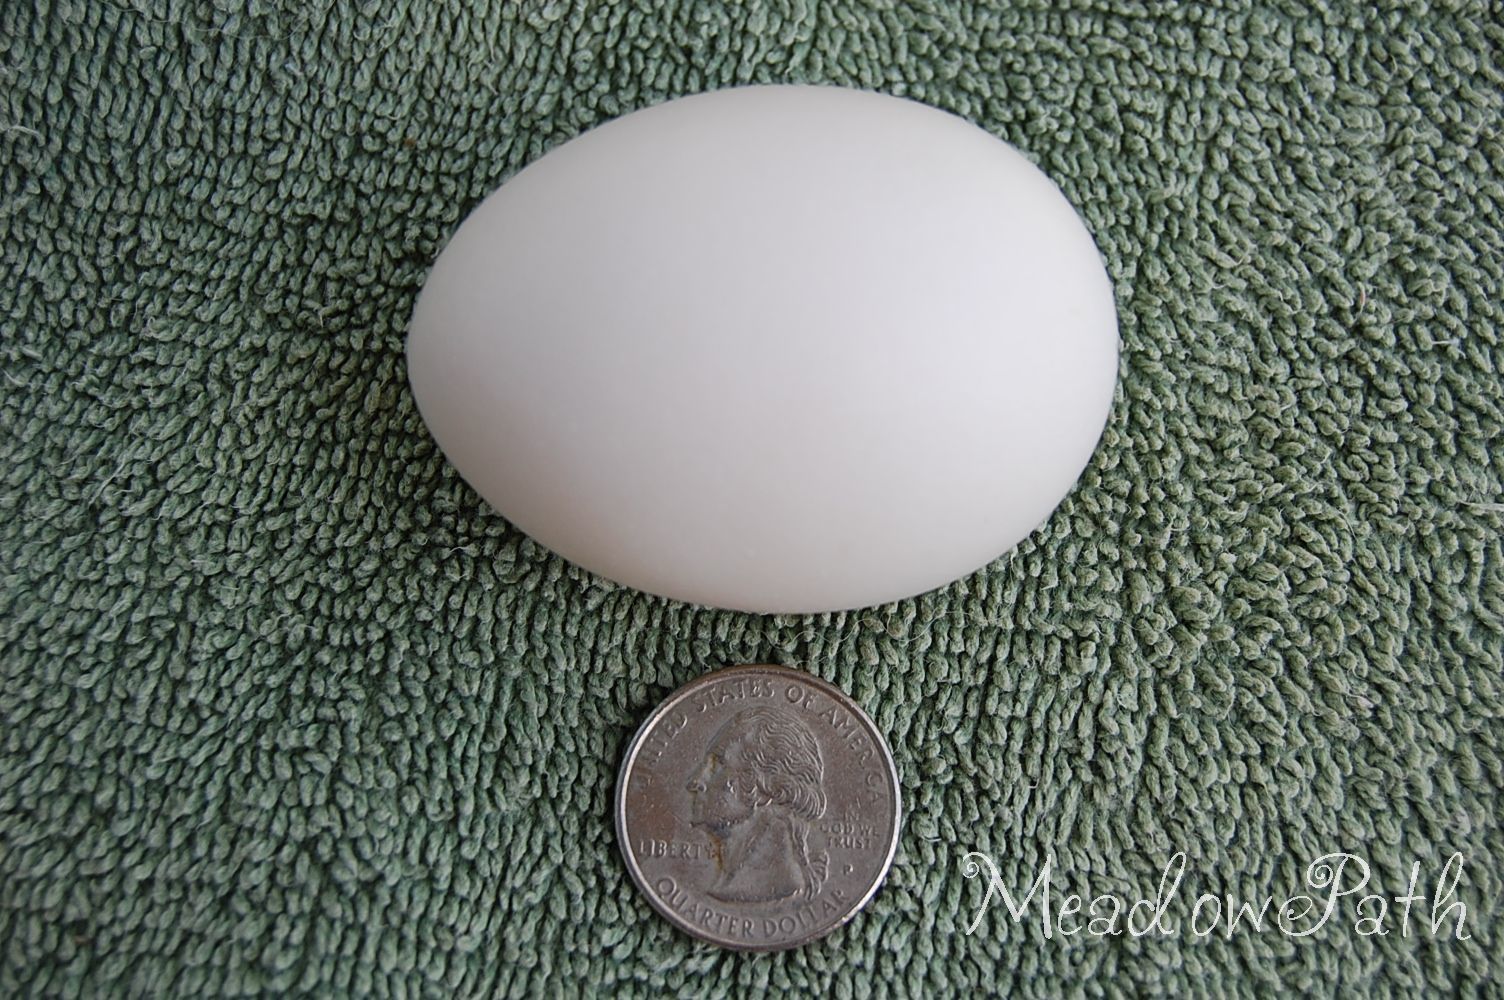 Typical Jaerhon egg